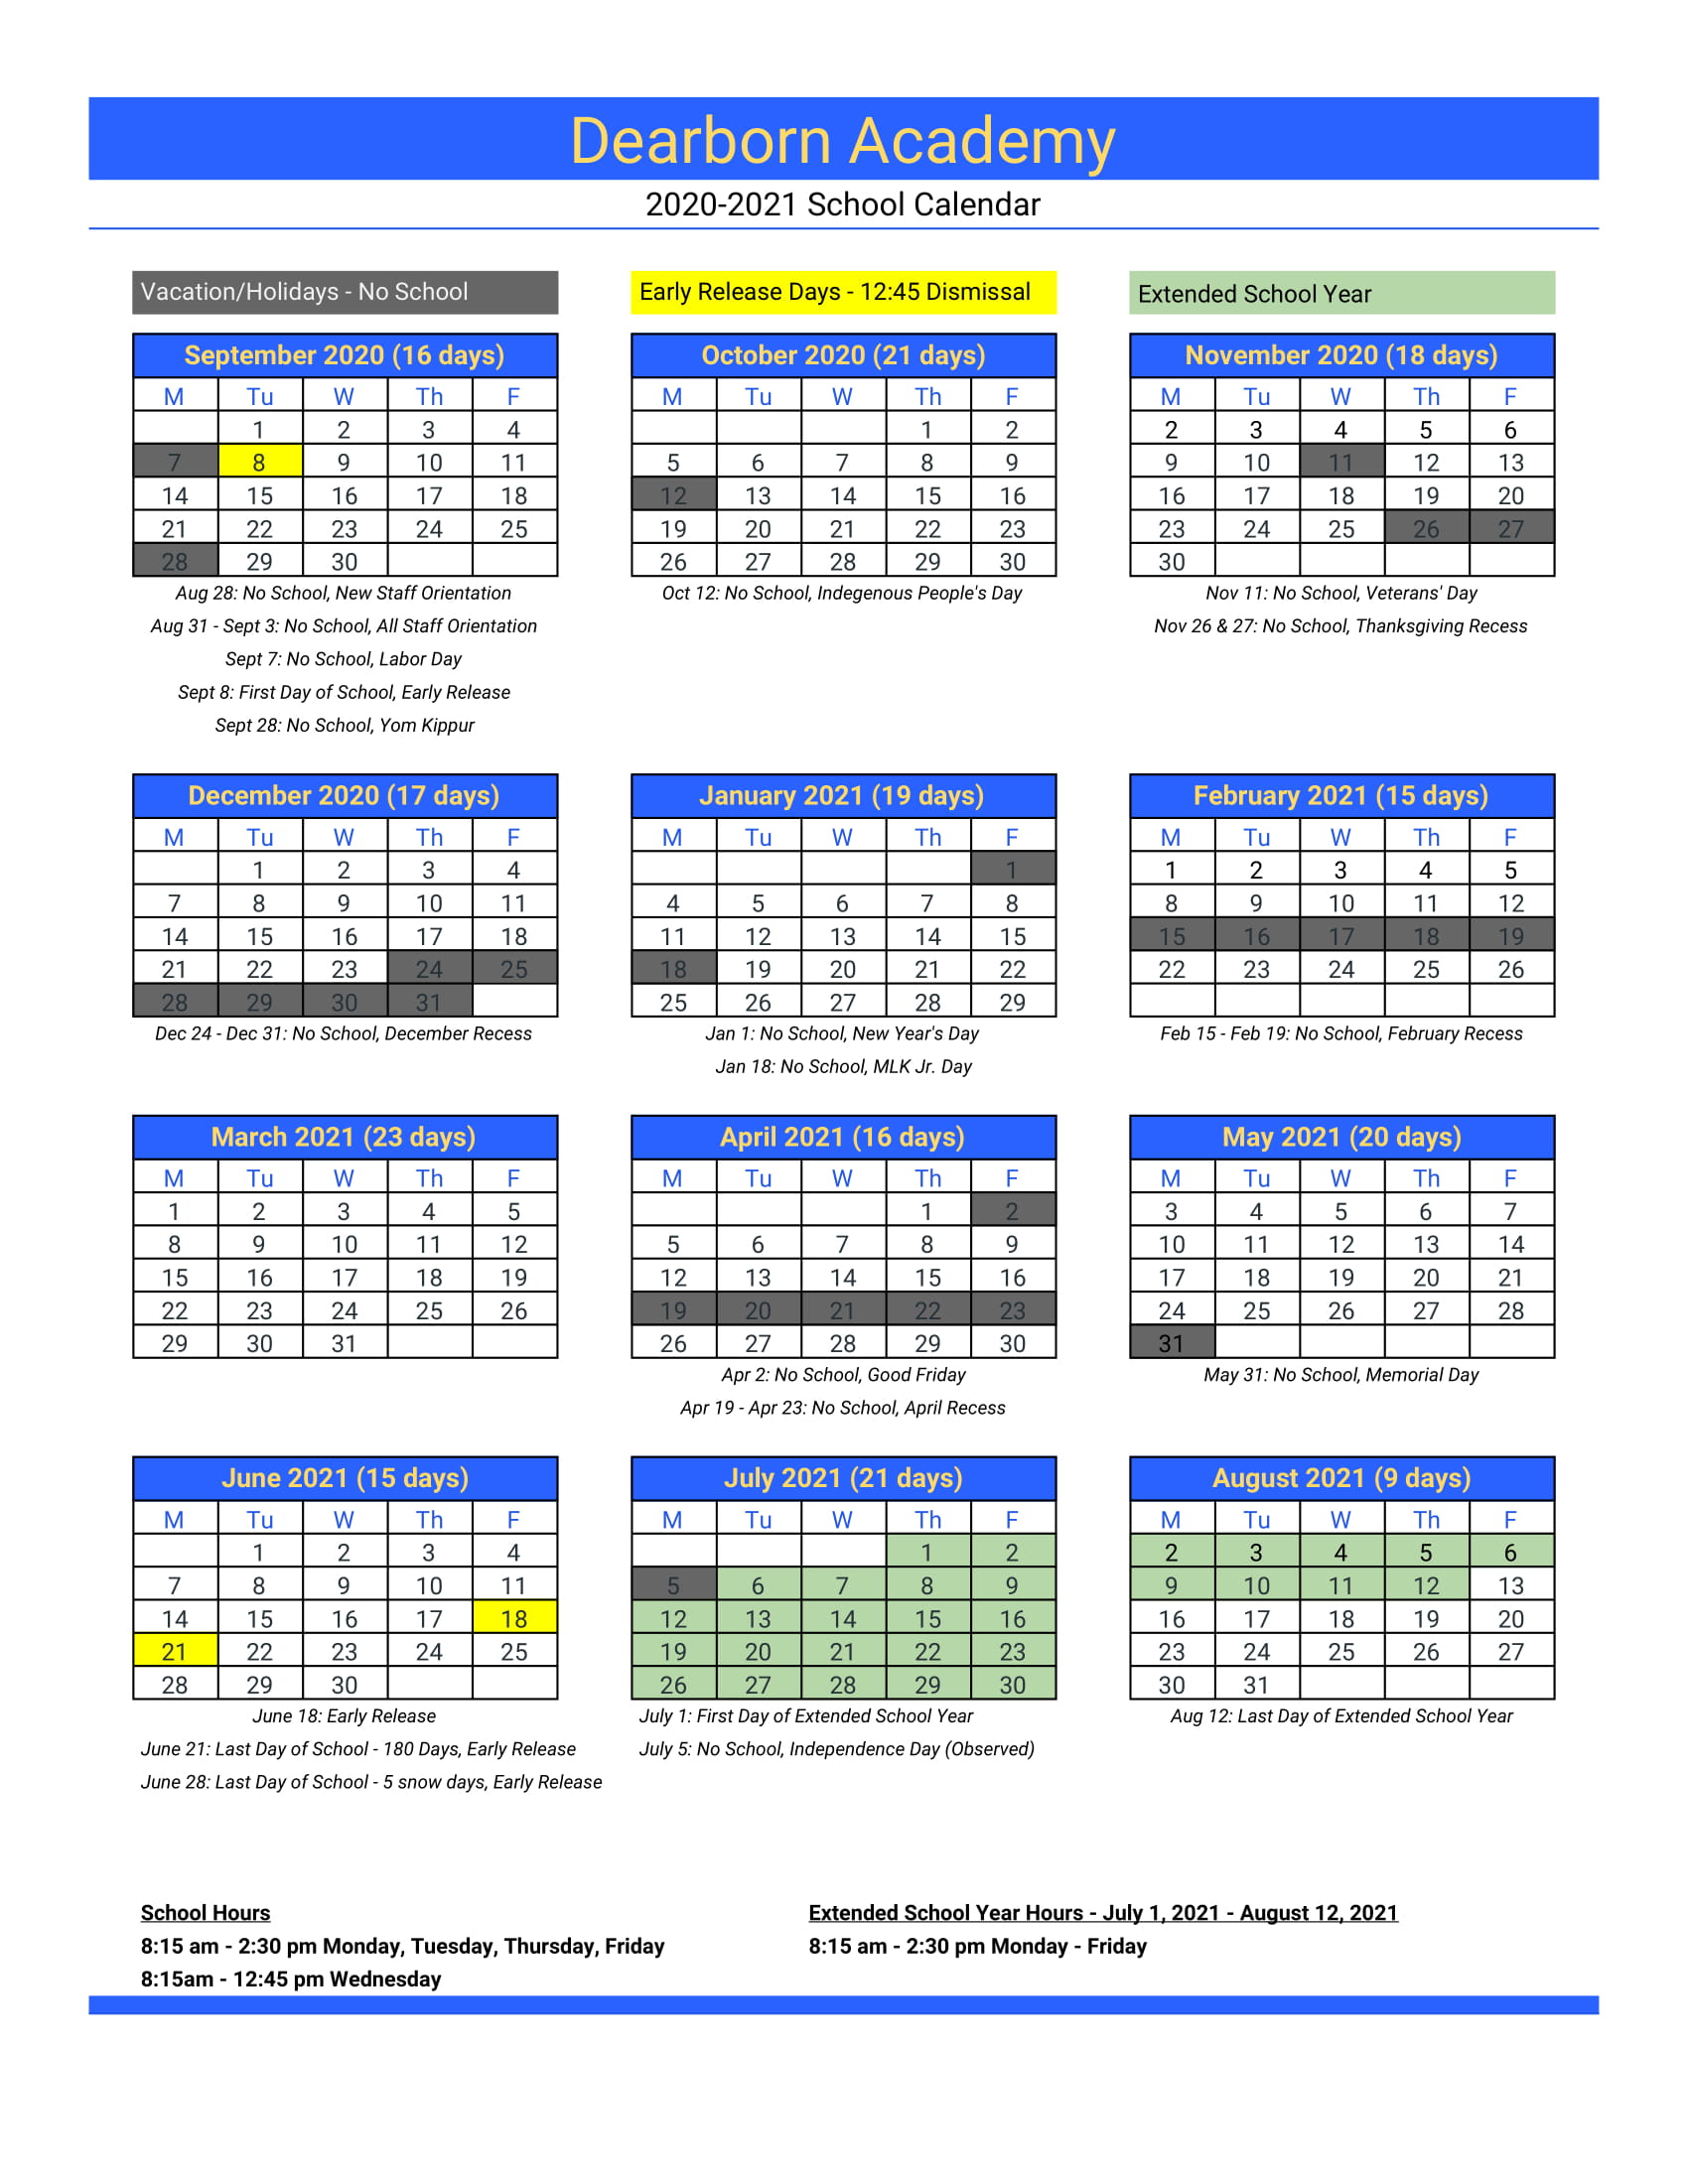 School Calendar – Dearborn Academy